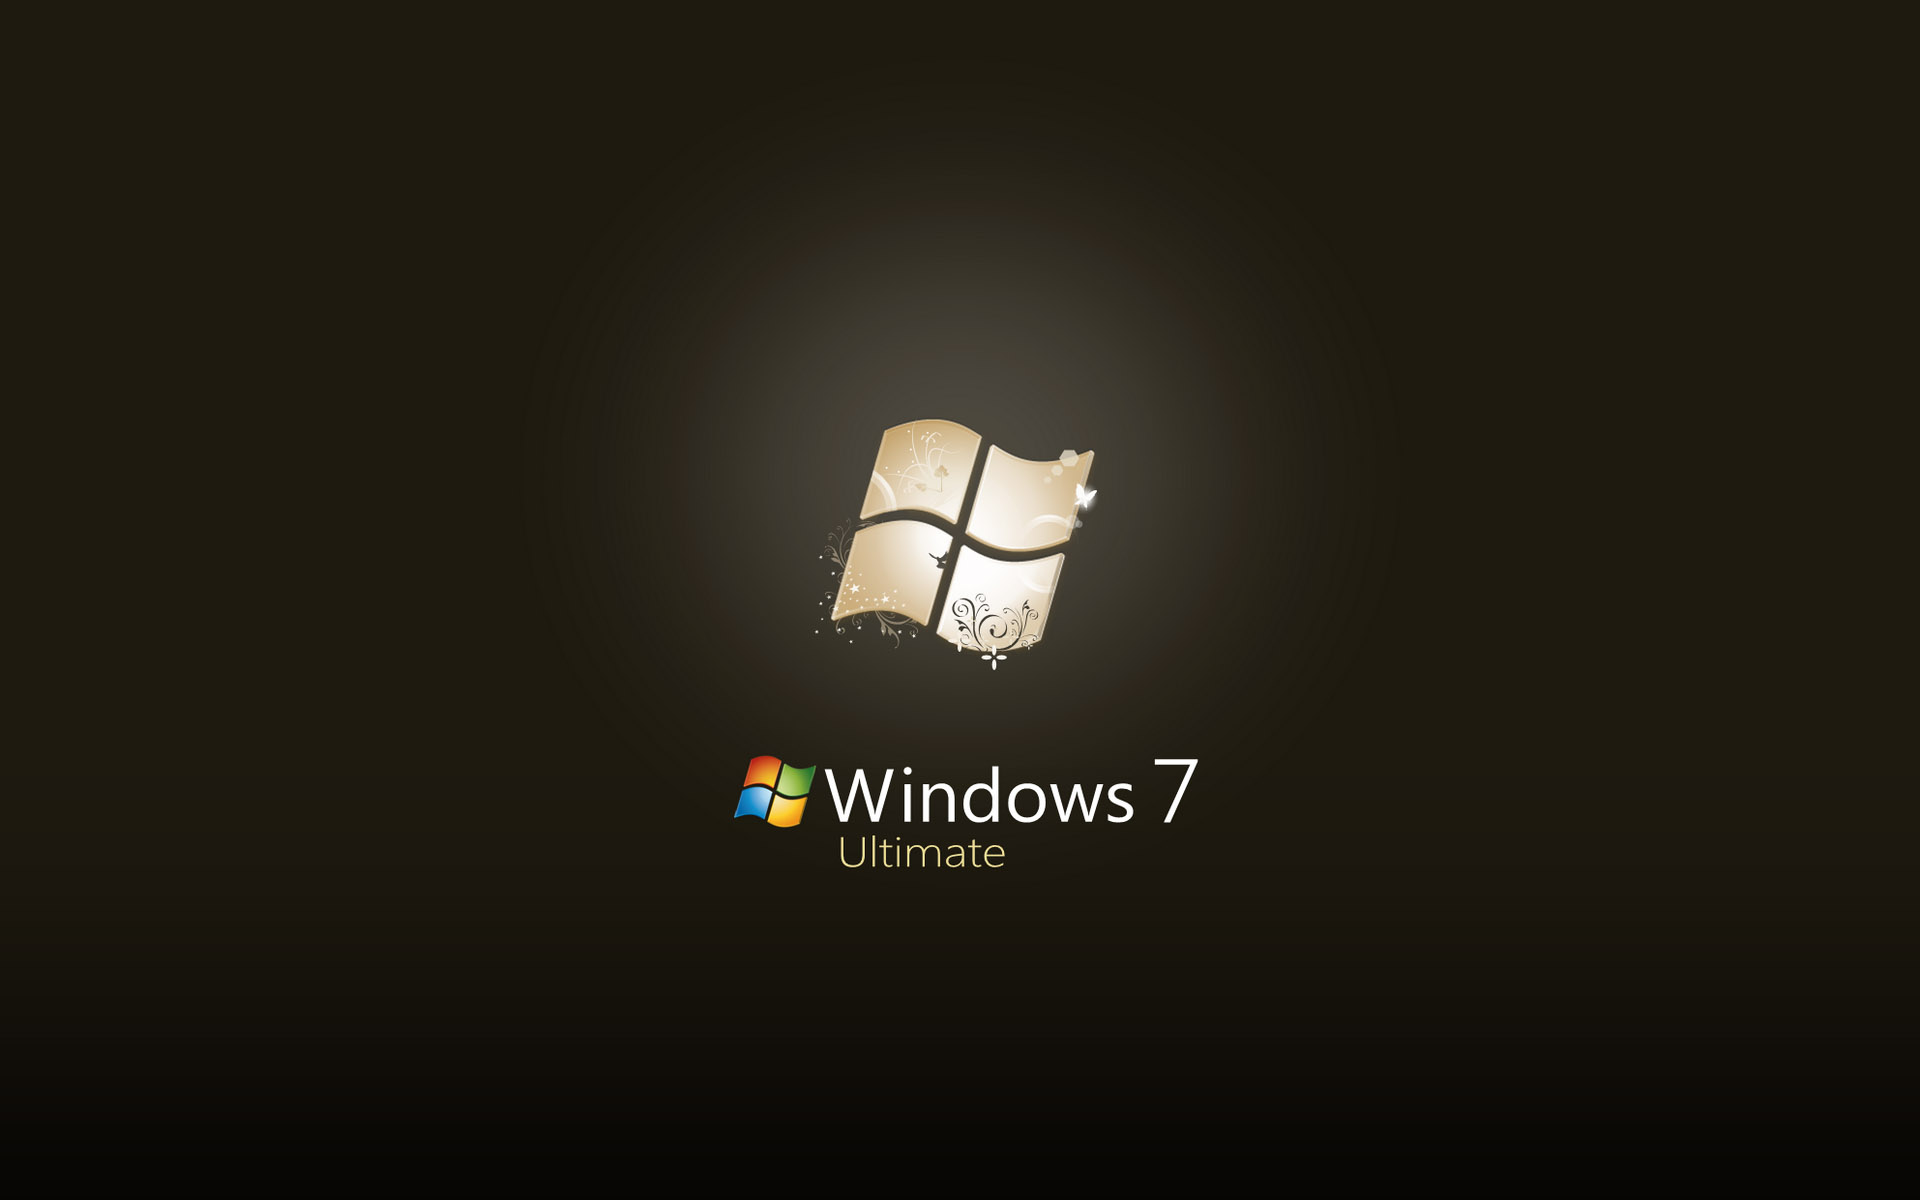 windows 7, technology, microsoft, logo, windows, windows 7 ultimate